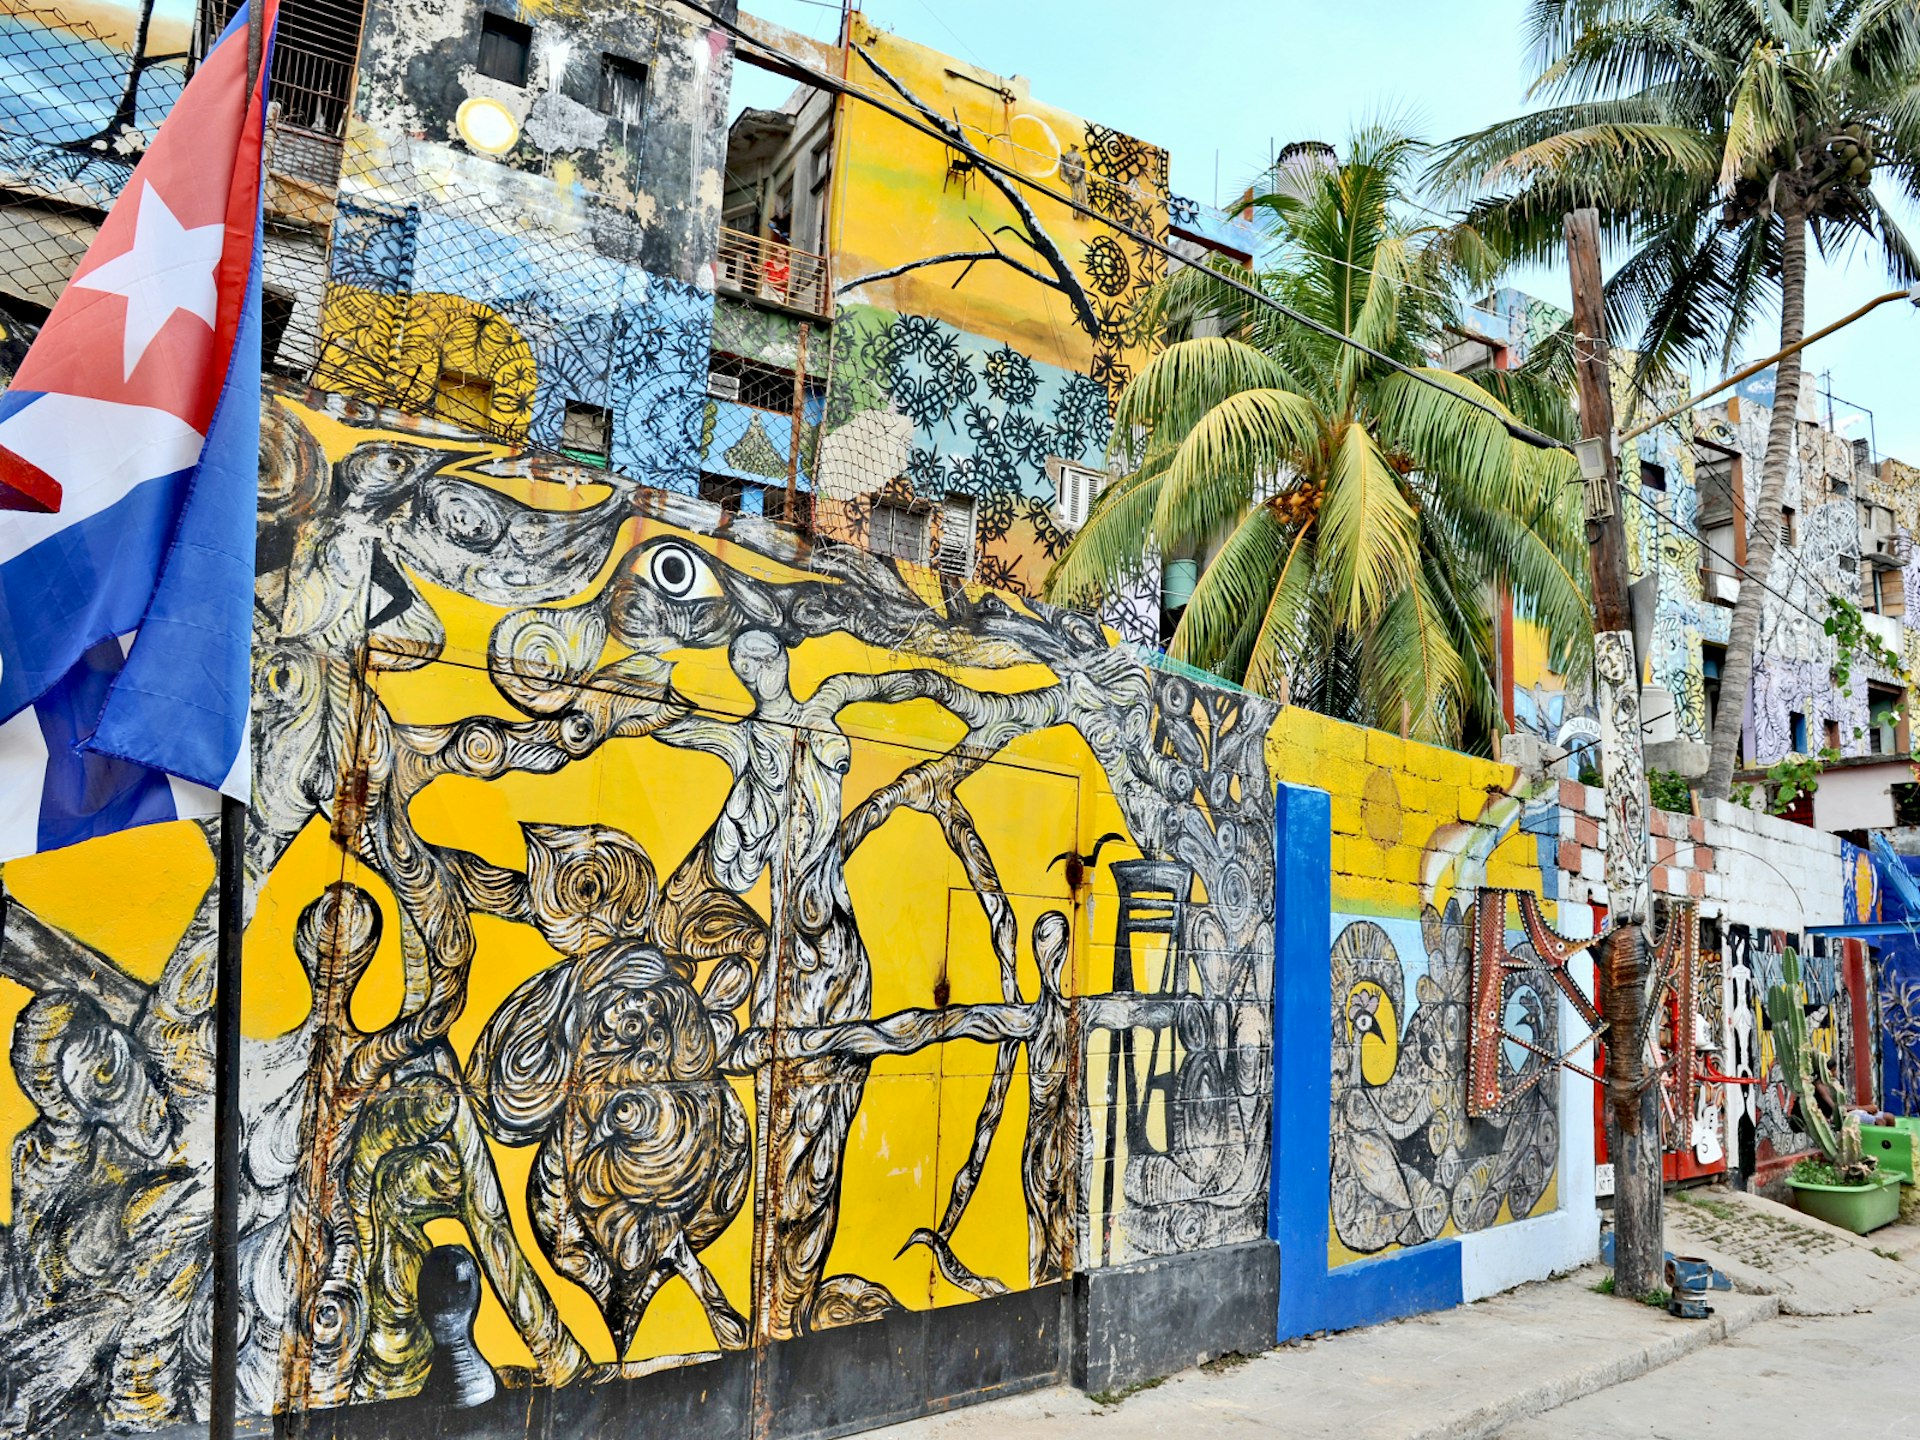 Vivid street art by Salvador Gonzales Escalona along the Callejon de Hamel in Havana, Cuba